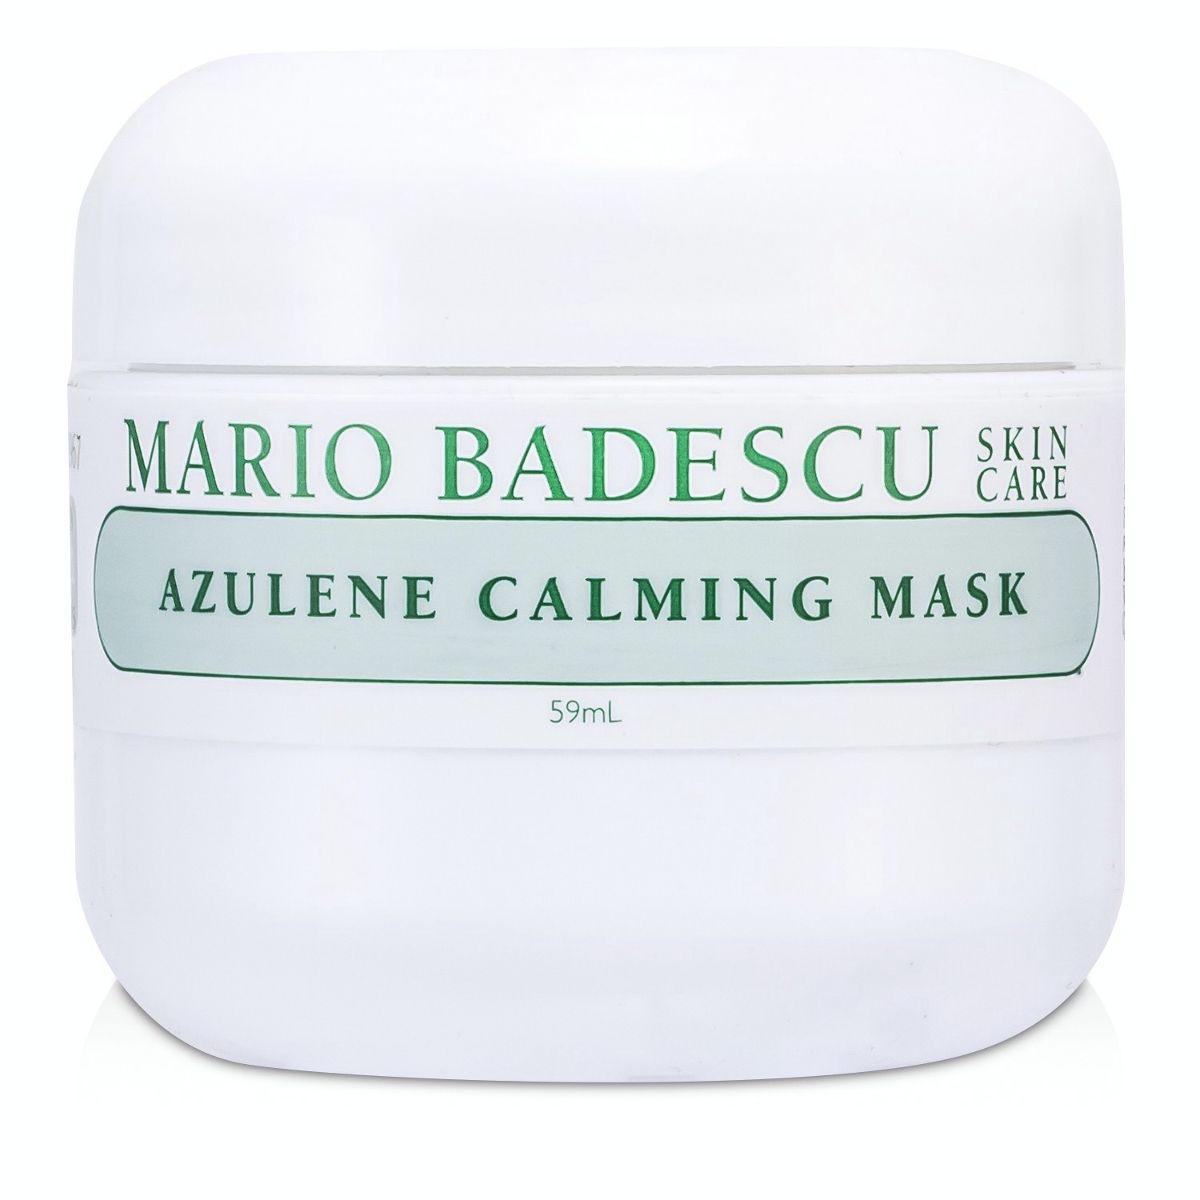 Azulene Calming Mask - For All Skin Types Mario Badescu Image